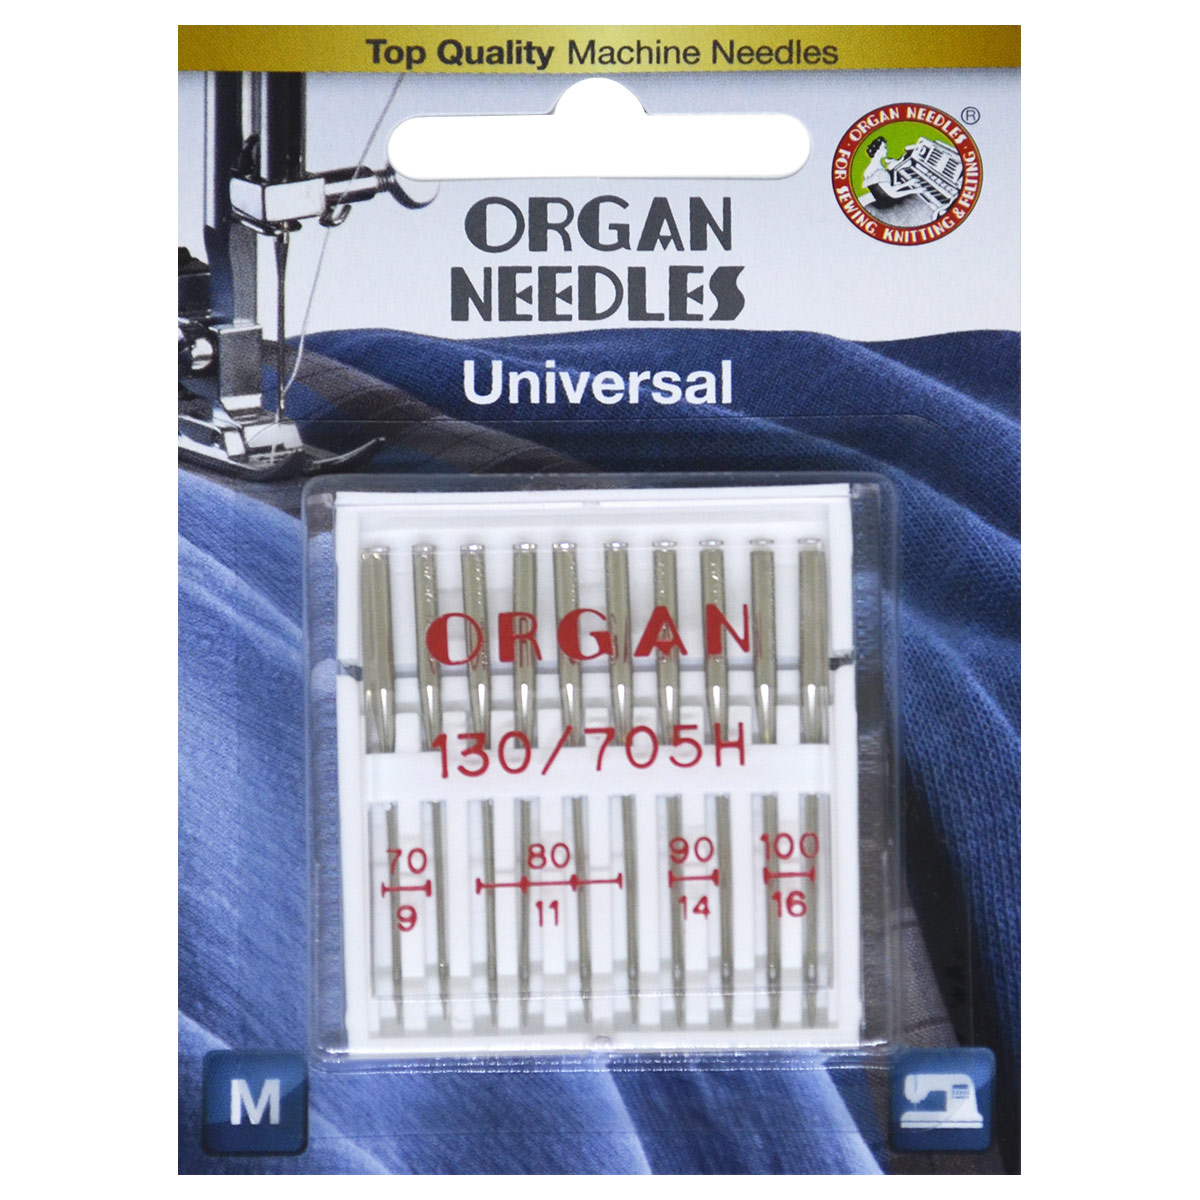 Иглы Organ универсальные 10/70-100 Blister иглы organ универсальные 5 multi blister